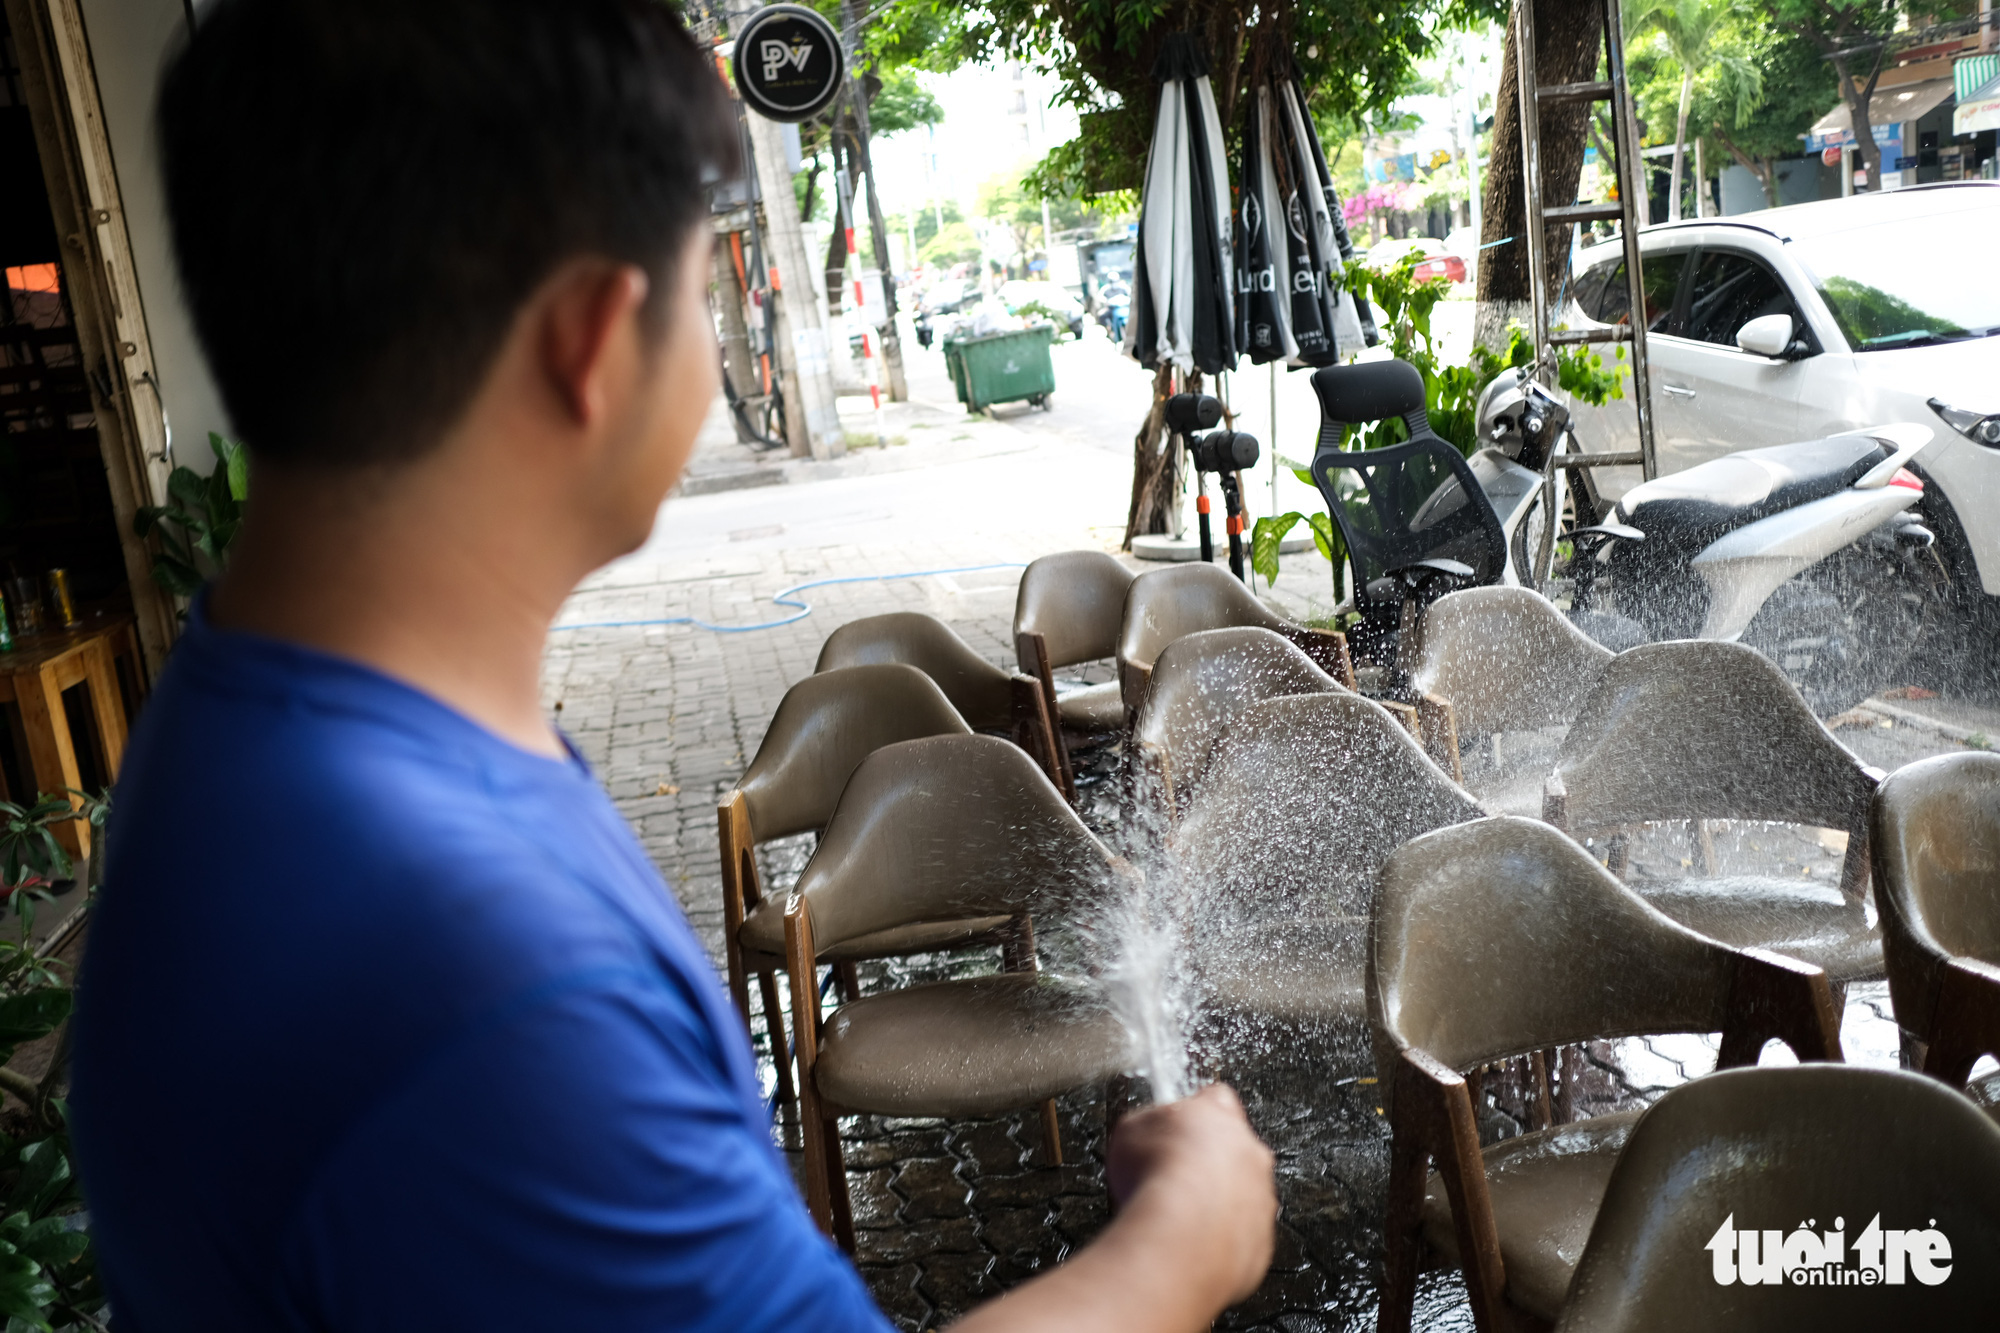 Restaurants, cafés in Da Nang resume sit-down service